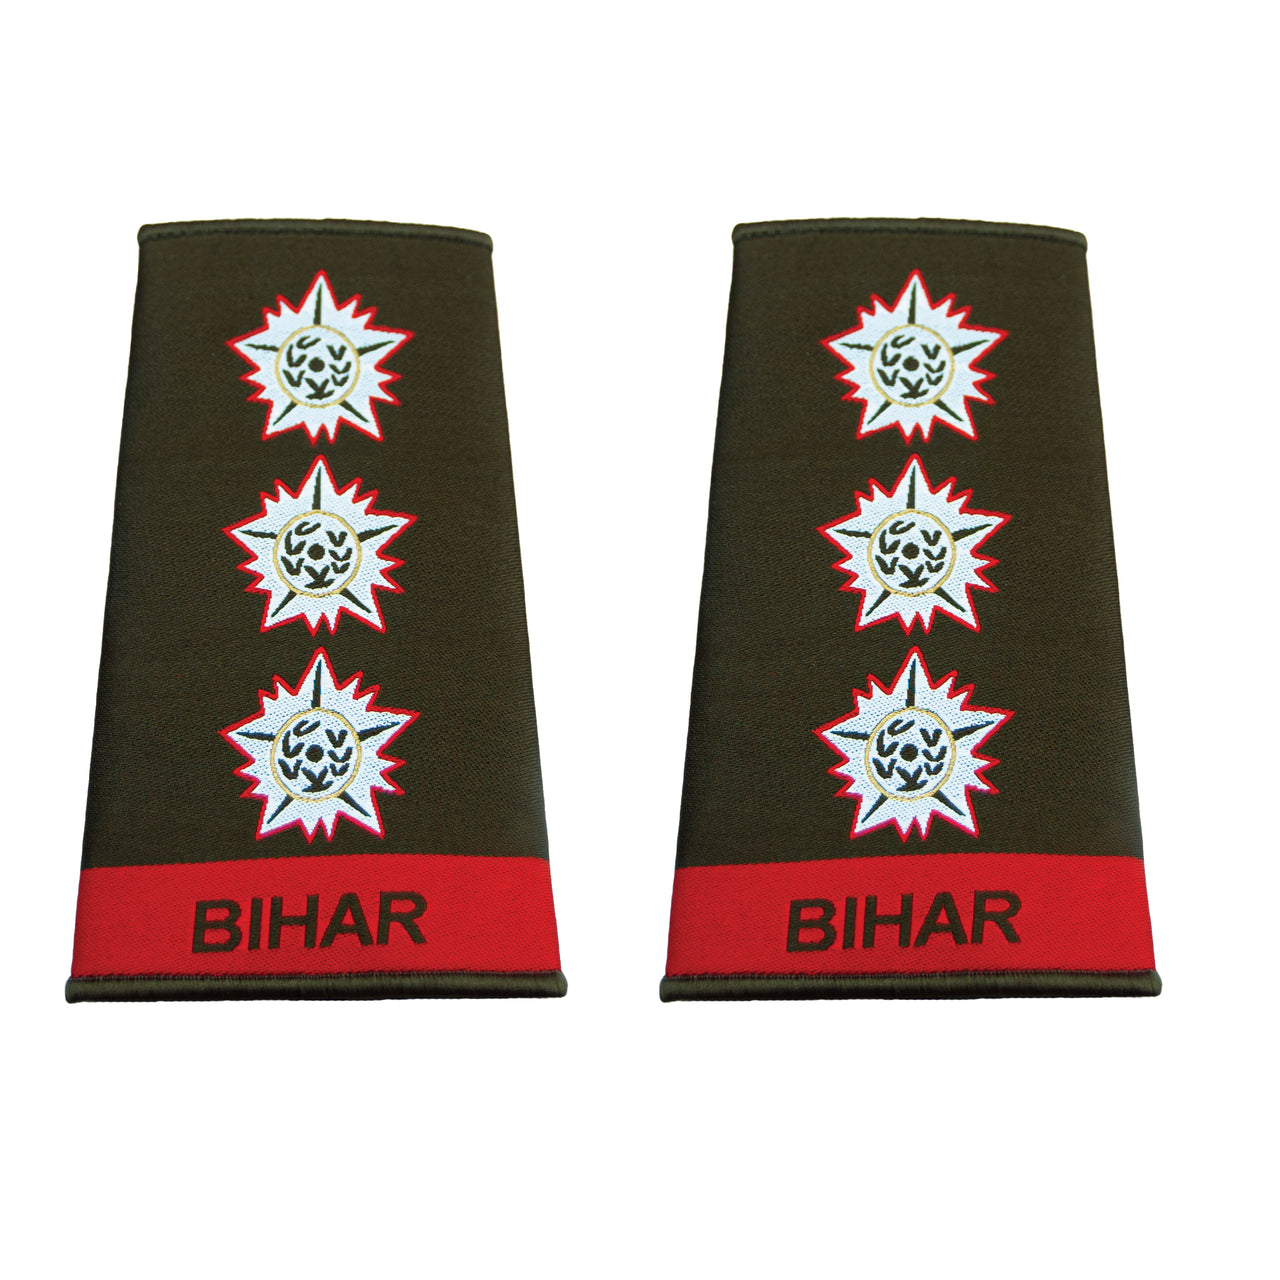 Indian Army Rank Epaulettes - Bihar Regiment